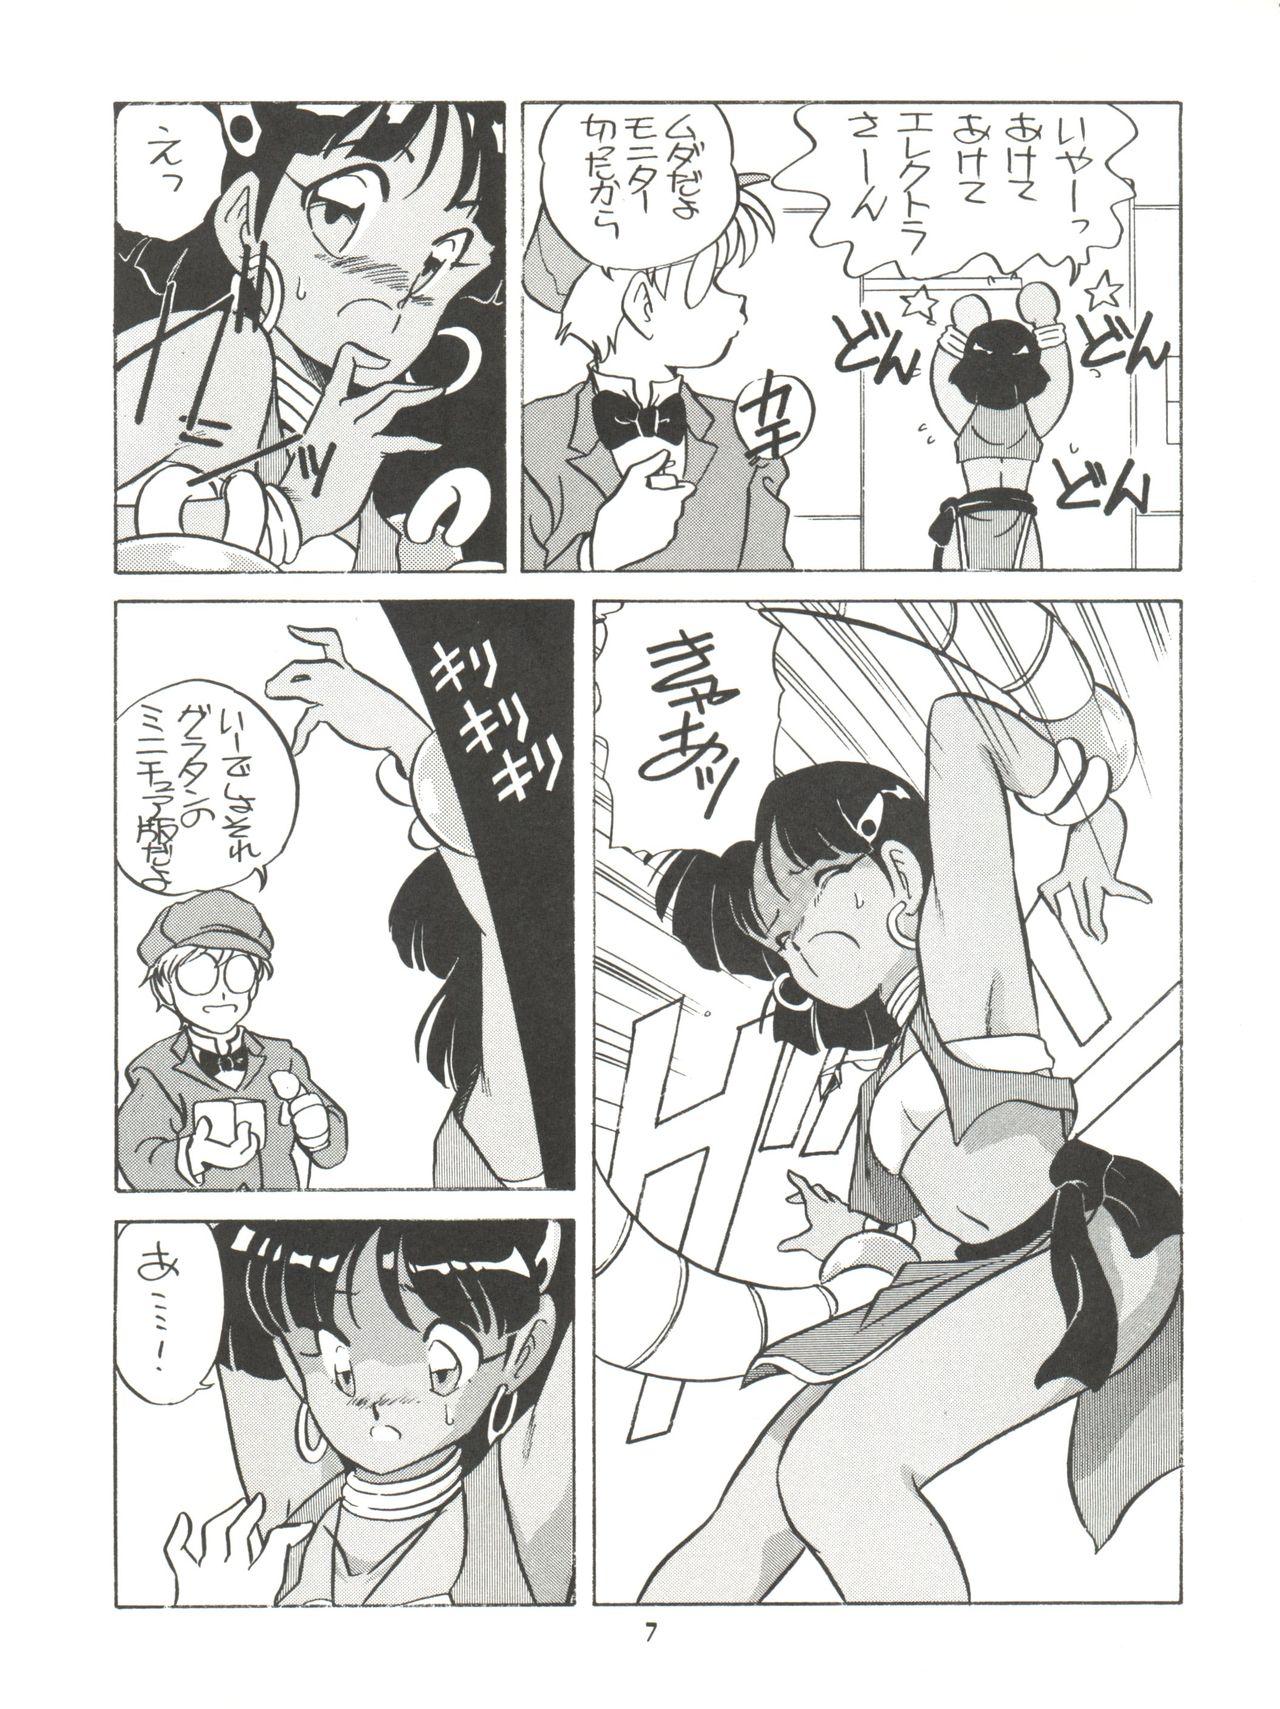 Spandex AMAMORI - Fushigi no umi no nadia Guys - Page 7